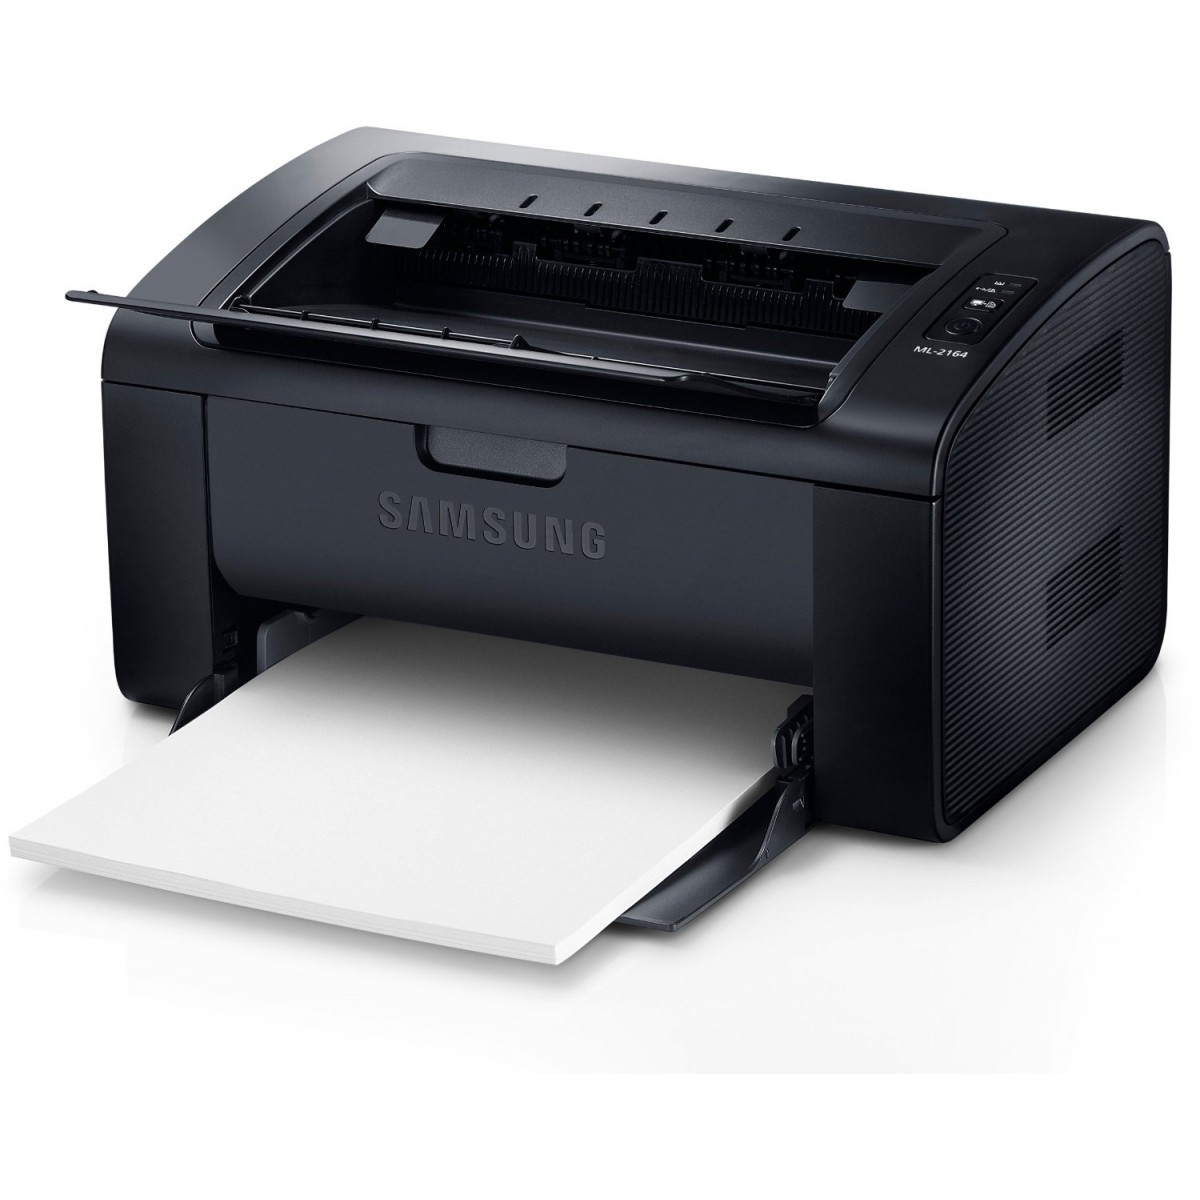 Ремонт принтера самсунг цена. Samsung ml-2160. Принтер самсунг мл 2164. Принтер самсунг ml 2160. Принтер Samsung ml-2160 черный.